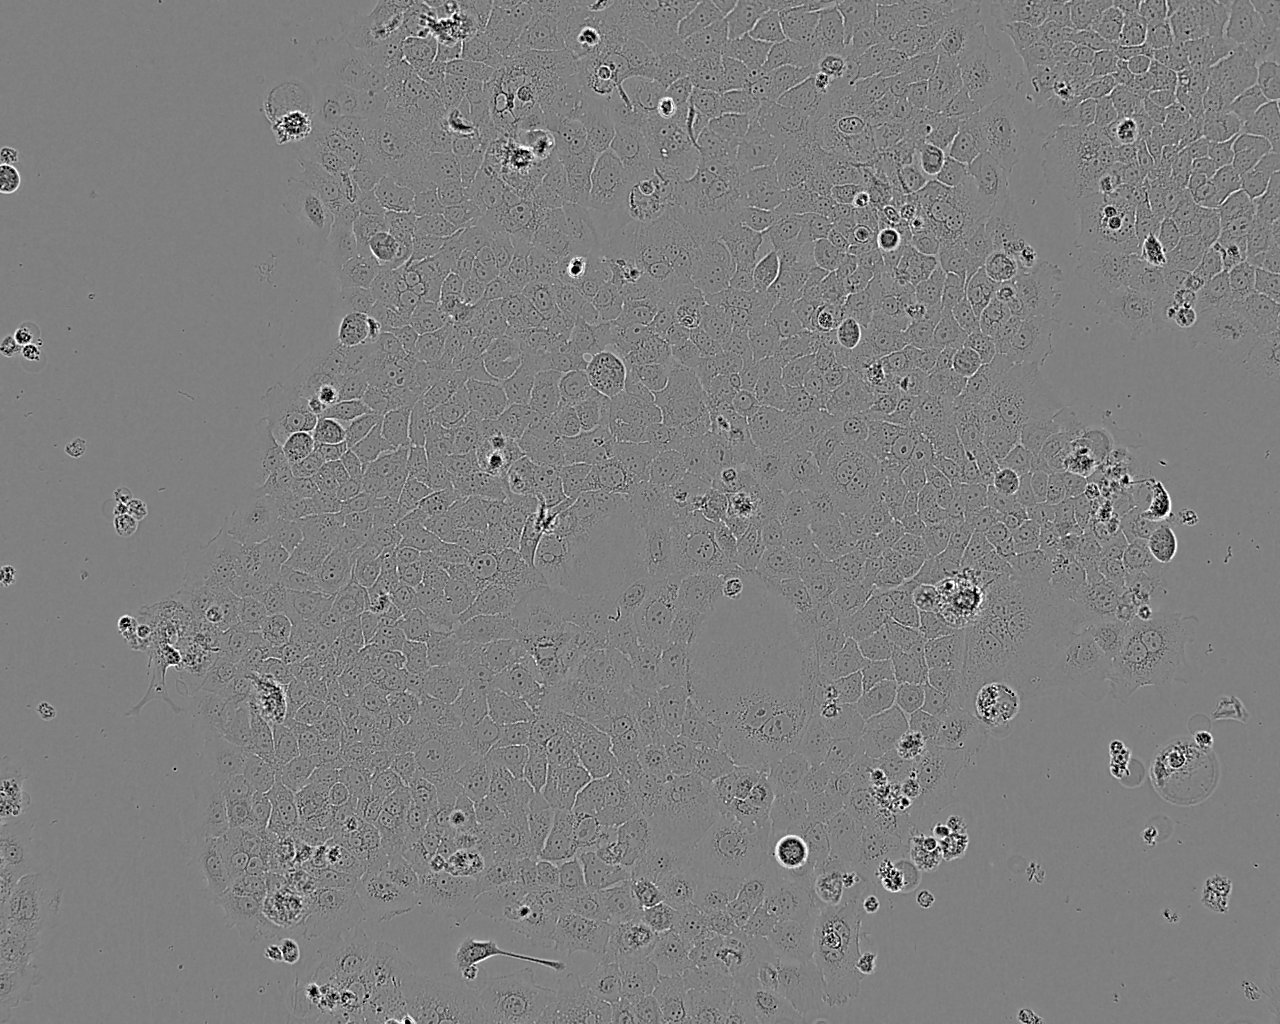 NCI-H2009 epithelioid cells人肺腺癌细胞系,NCI-H2009 epithelioid cells